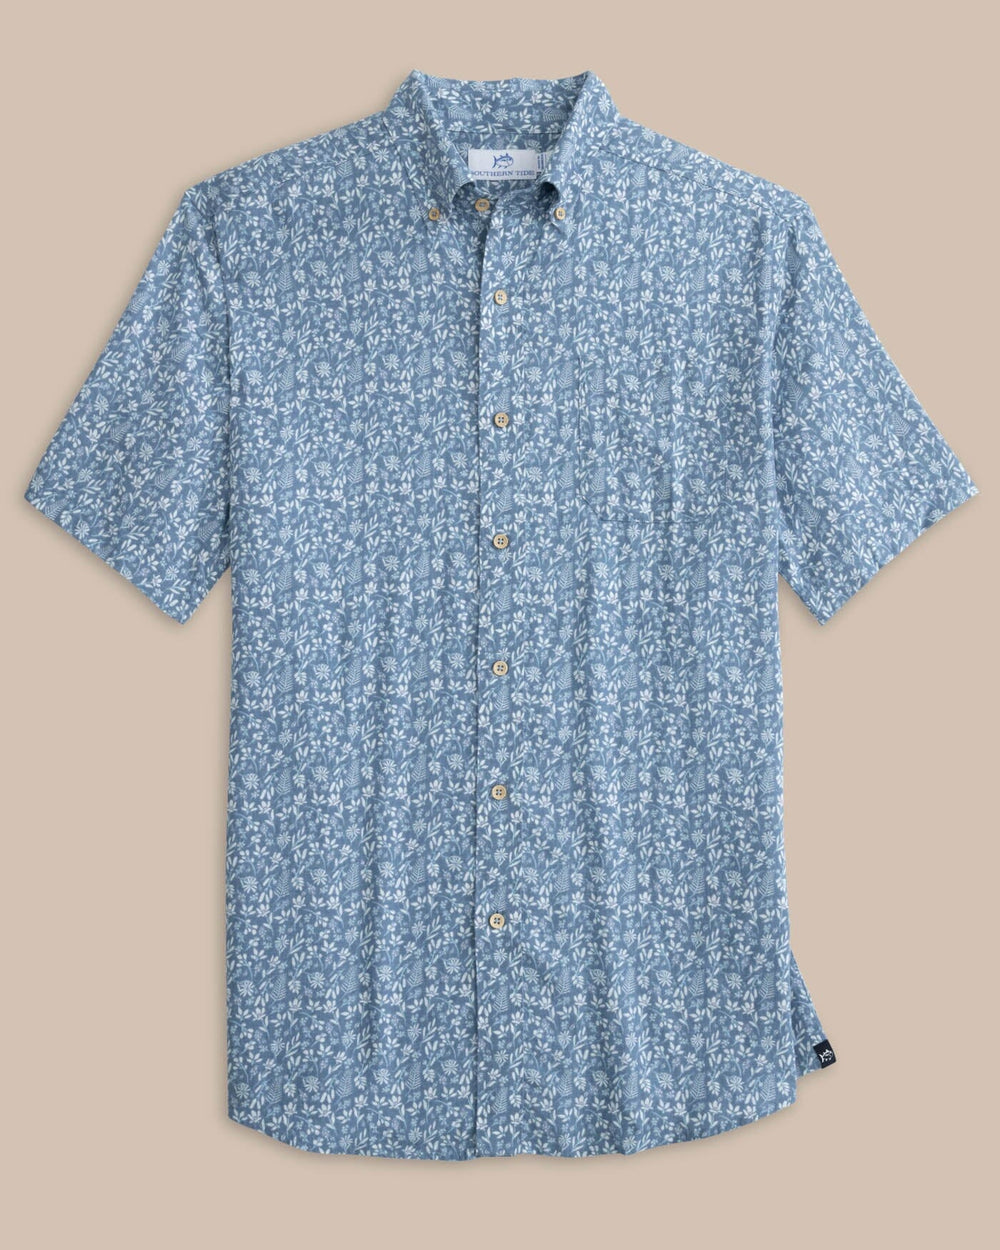 Men's Linen Rayon Ditzy Floral Short Sleeve Shirt | Southern Tide